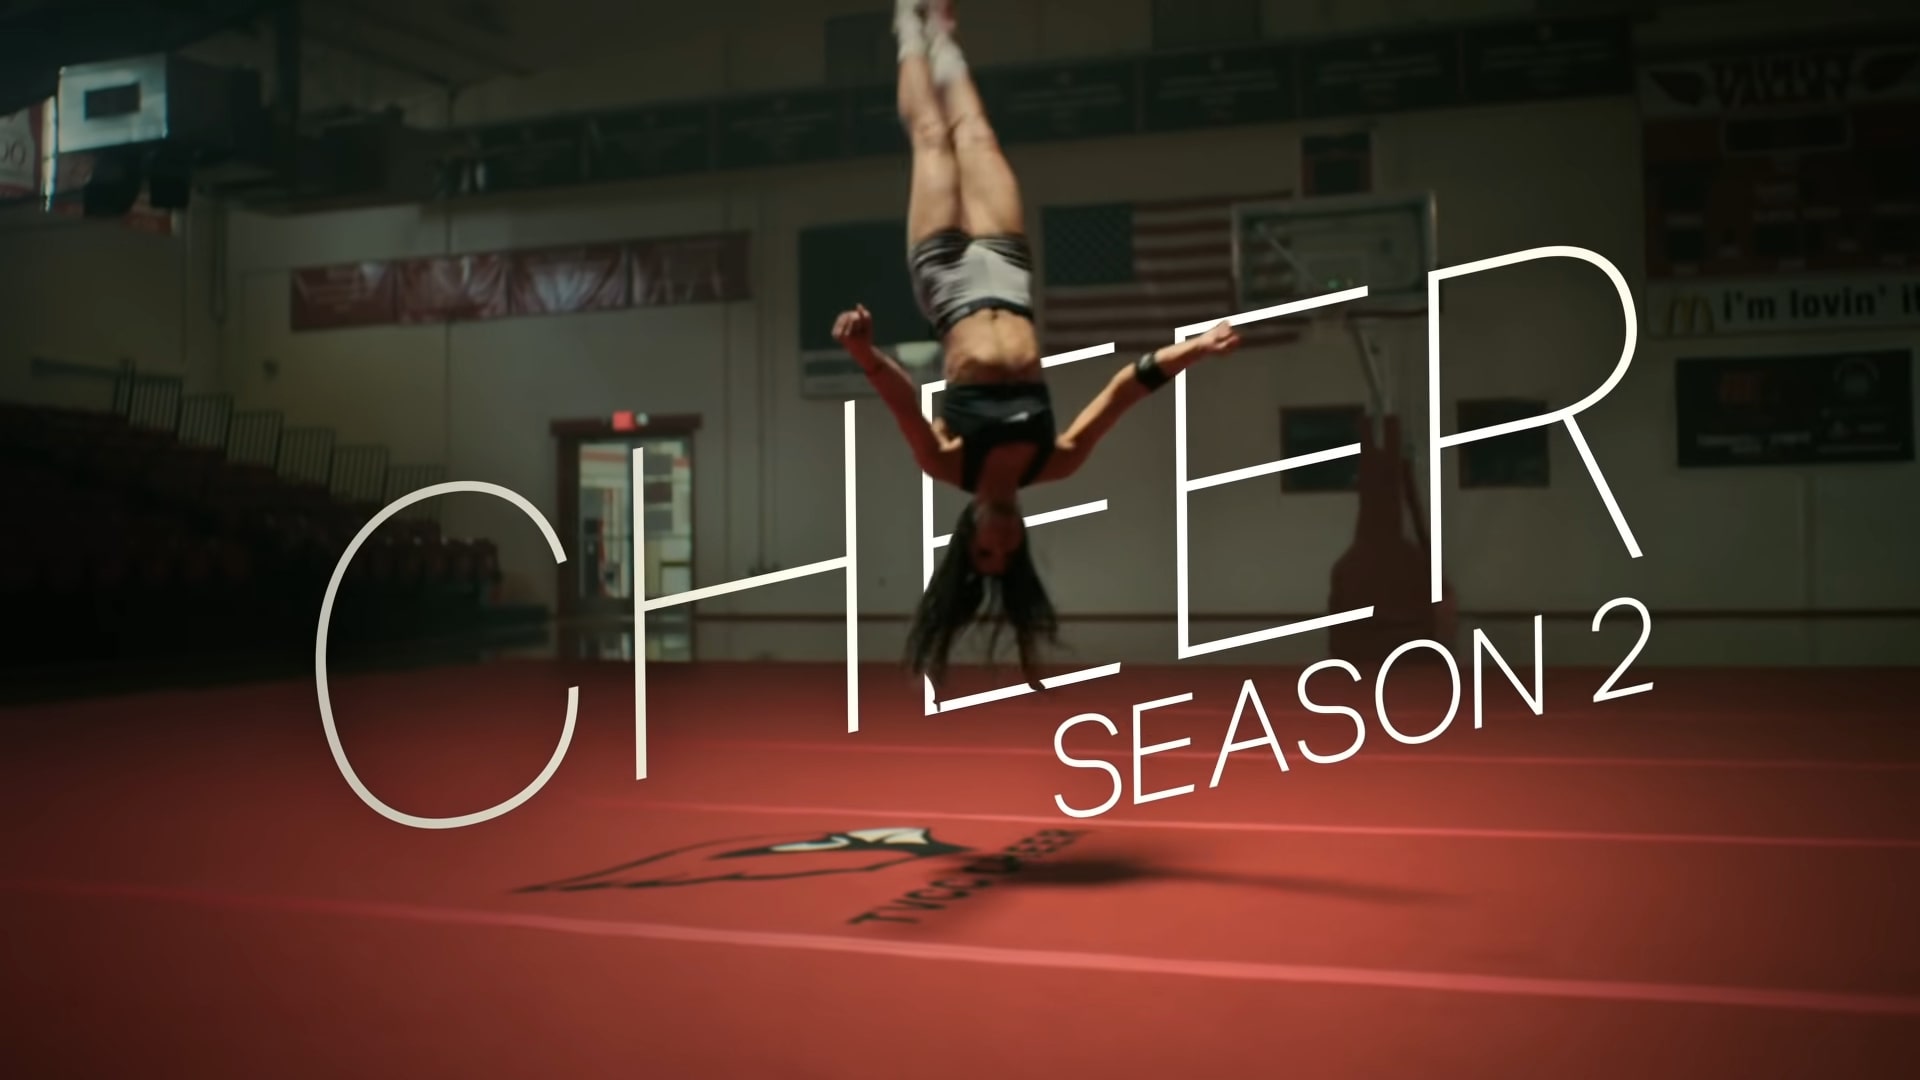 Cheer Season 2 Trailer, Coming to Netflix in January 2022